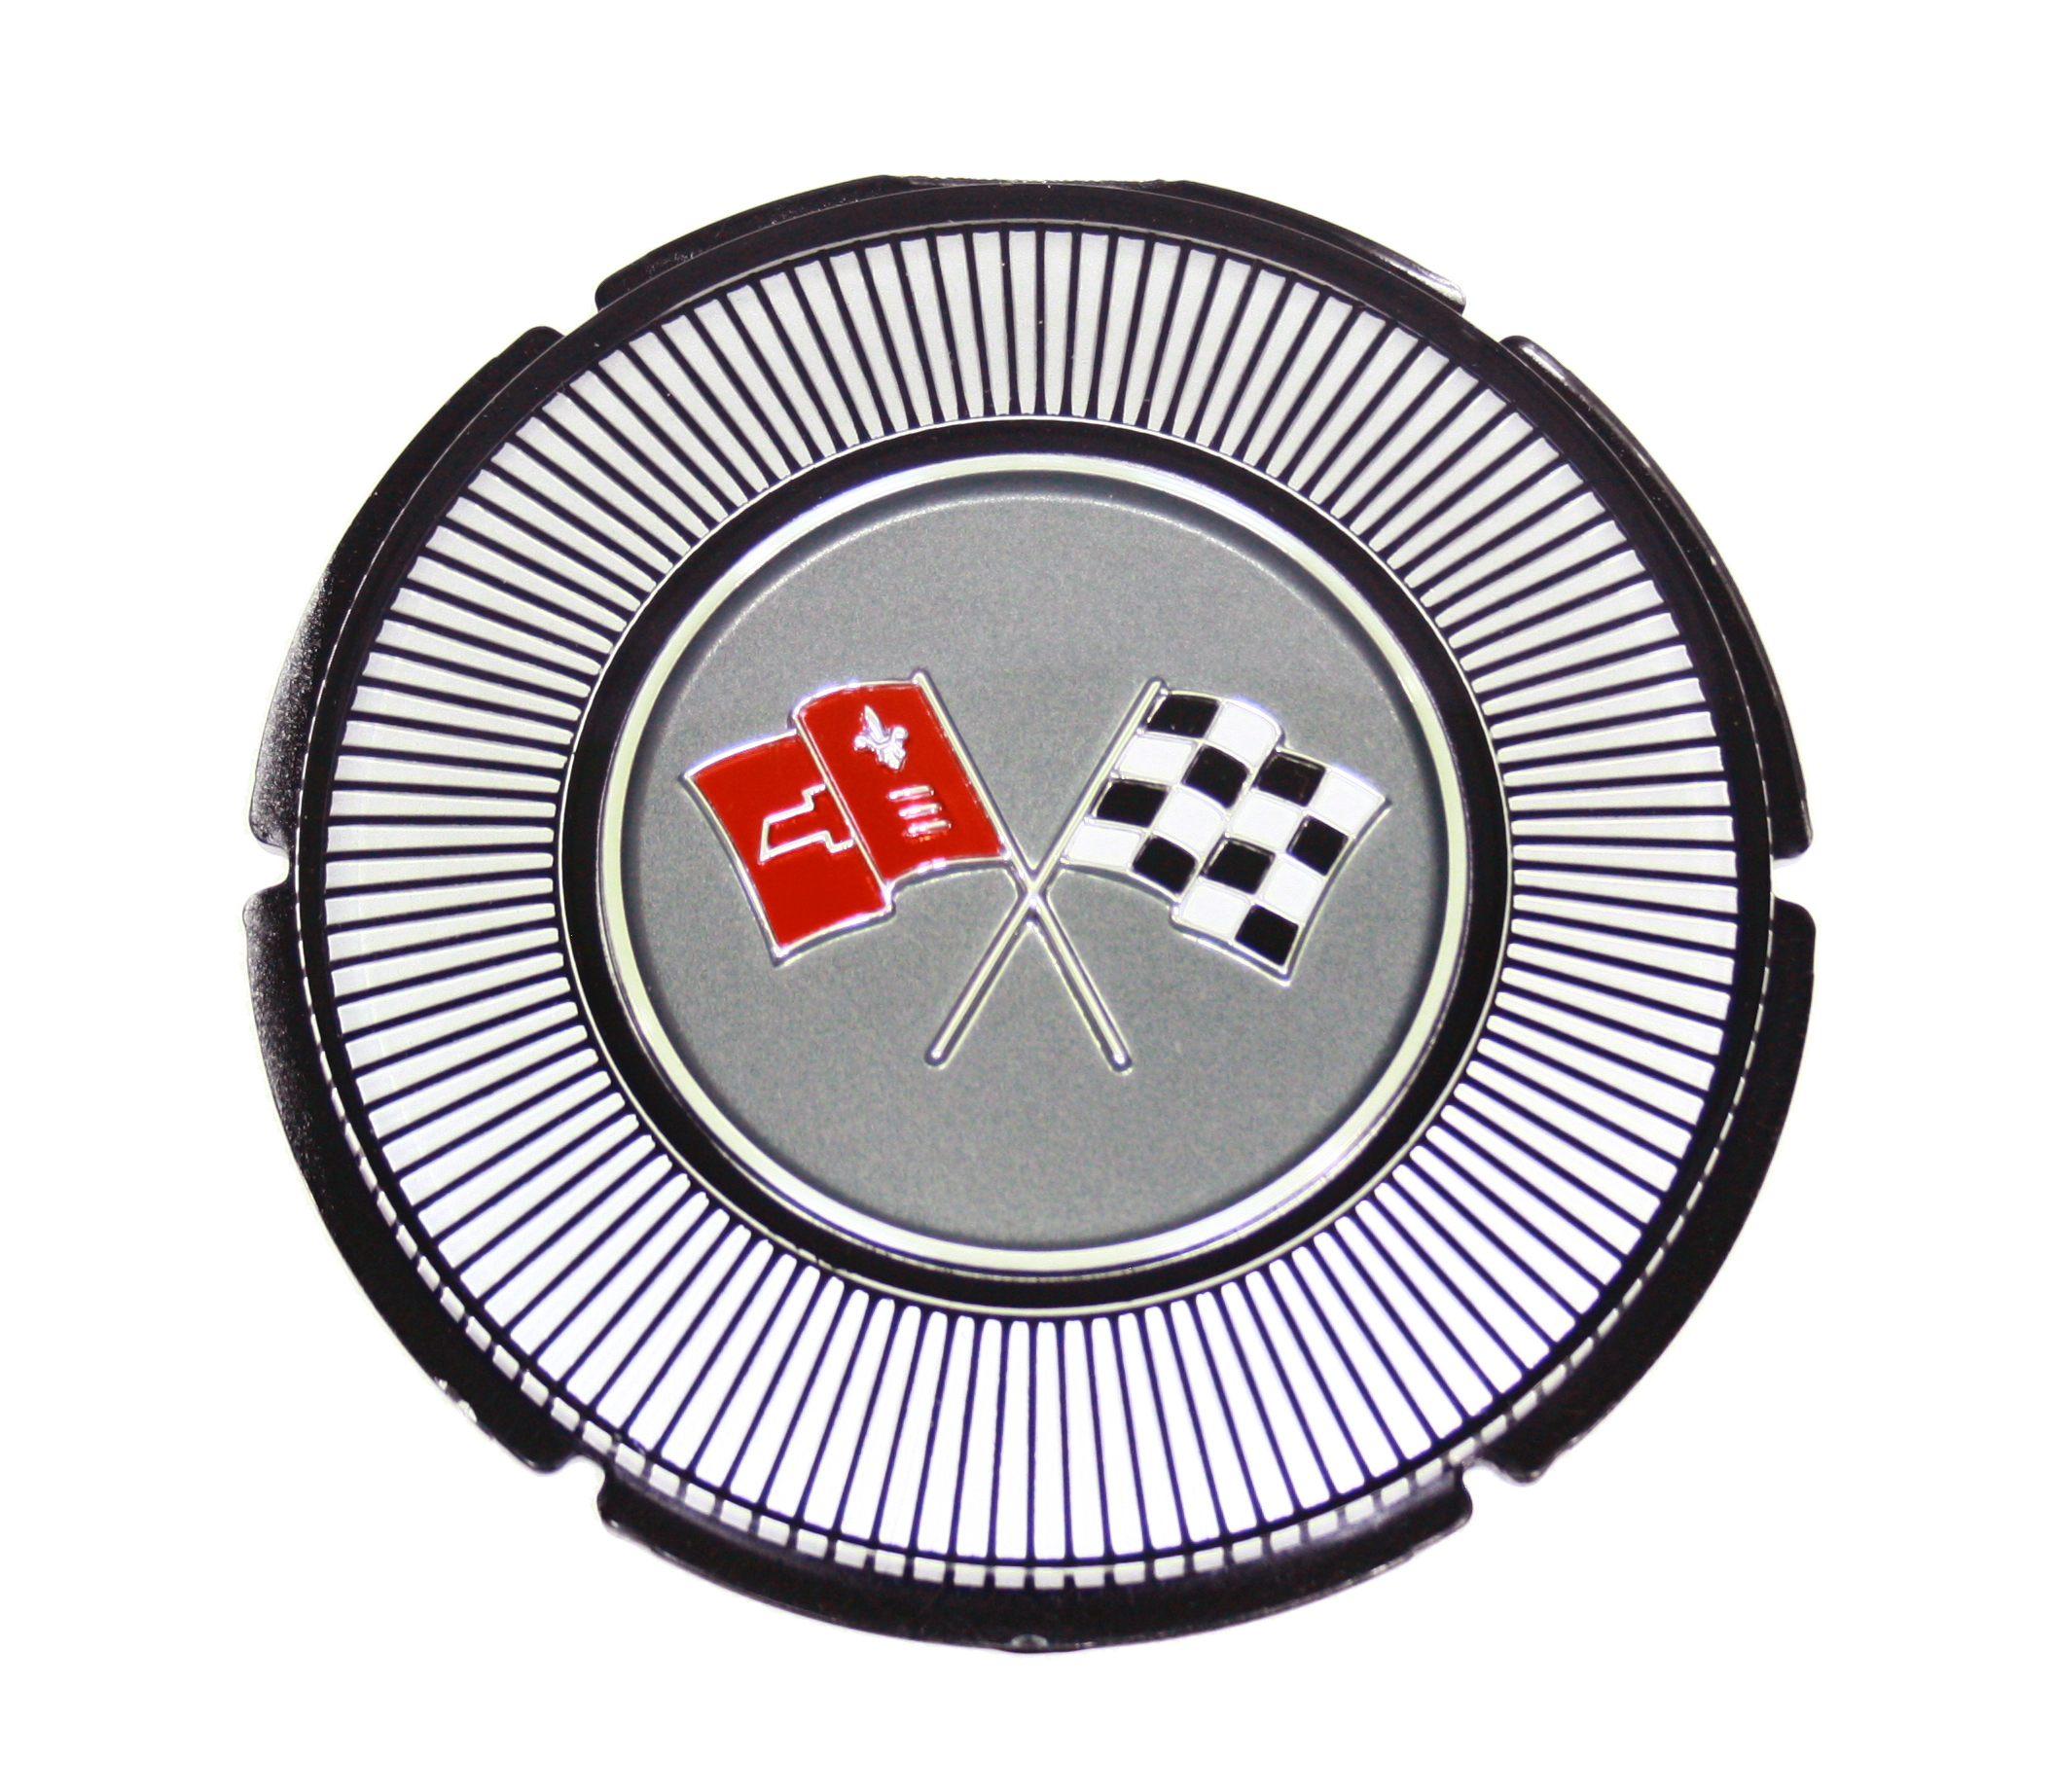 Corvette Gas Door Emblem - Crossed Flags